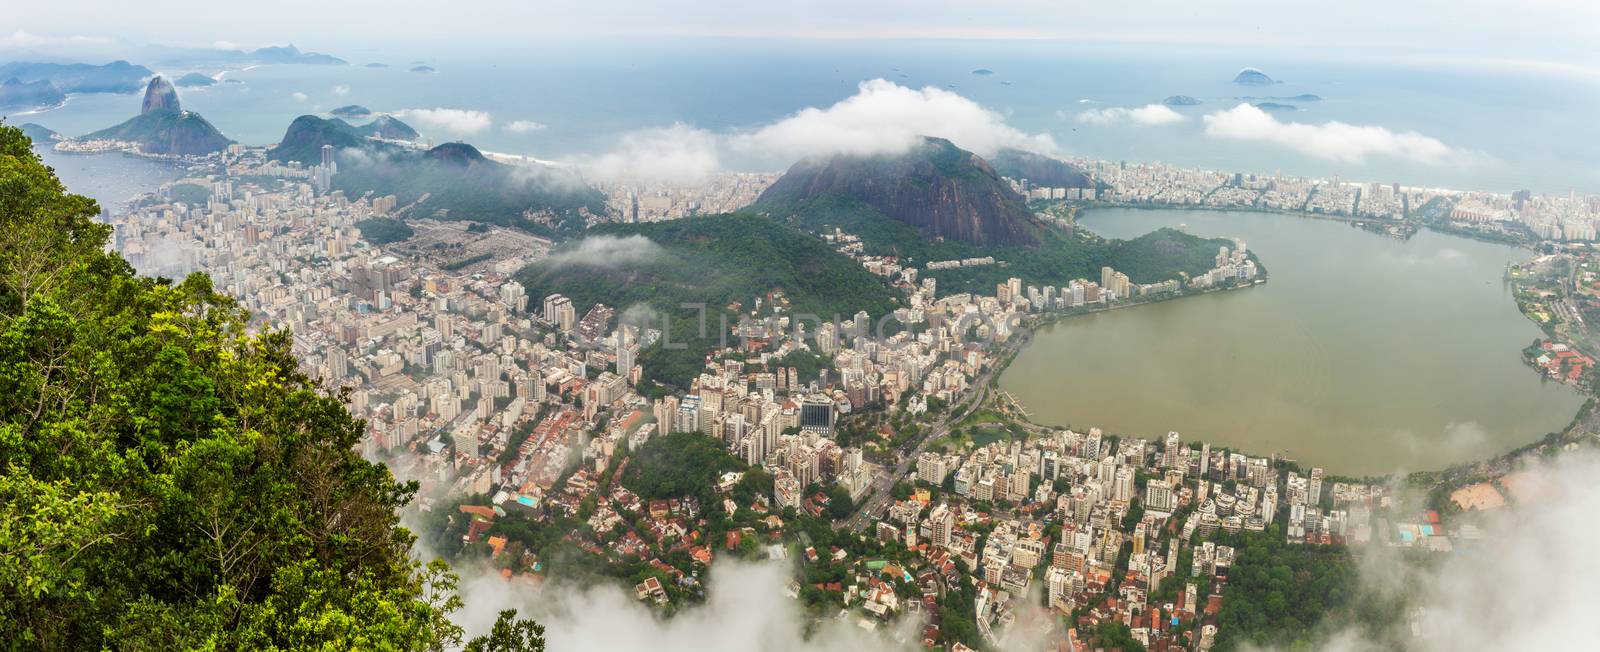 Rio city center downtown panorama with coastline, Rio de Janeiro by ambeon